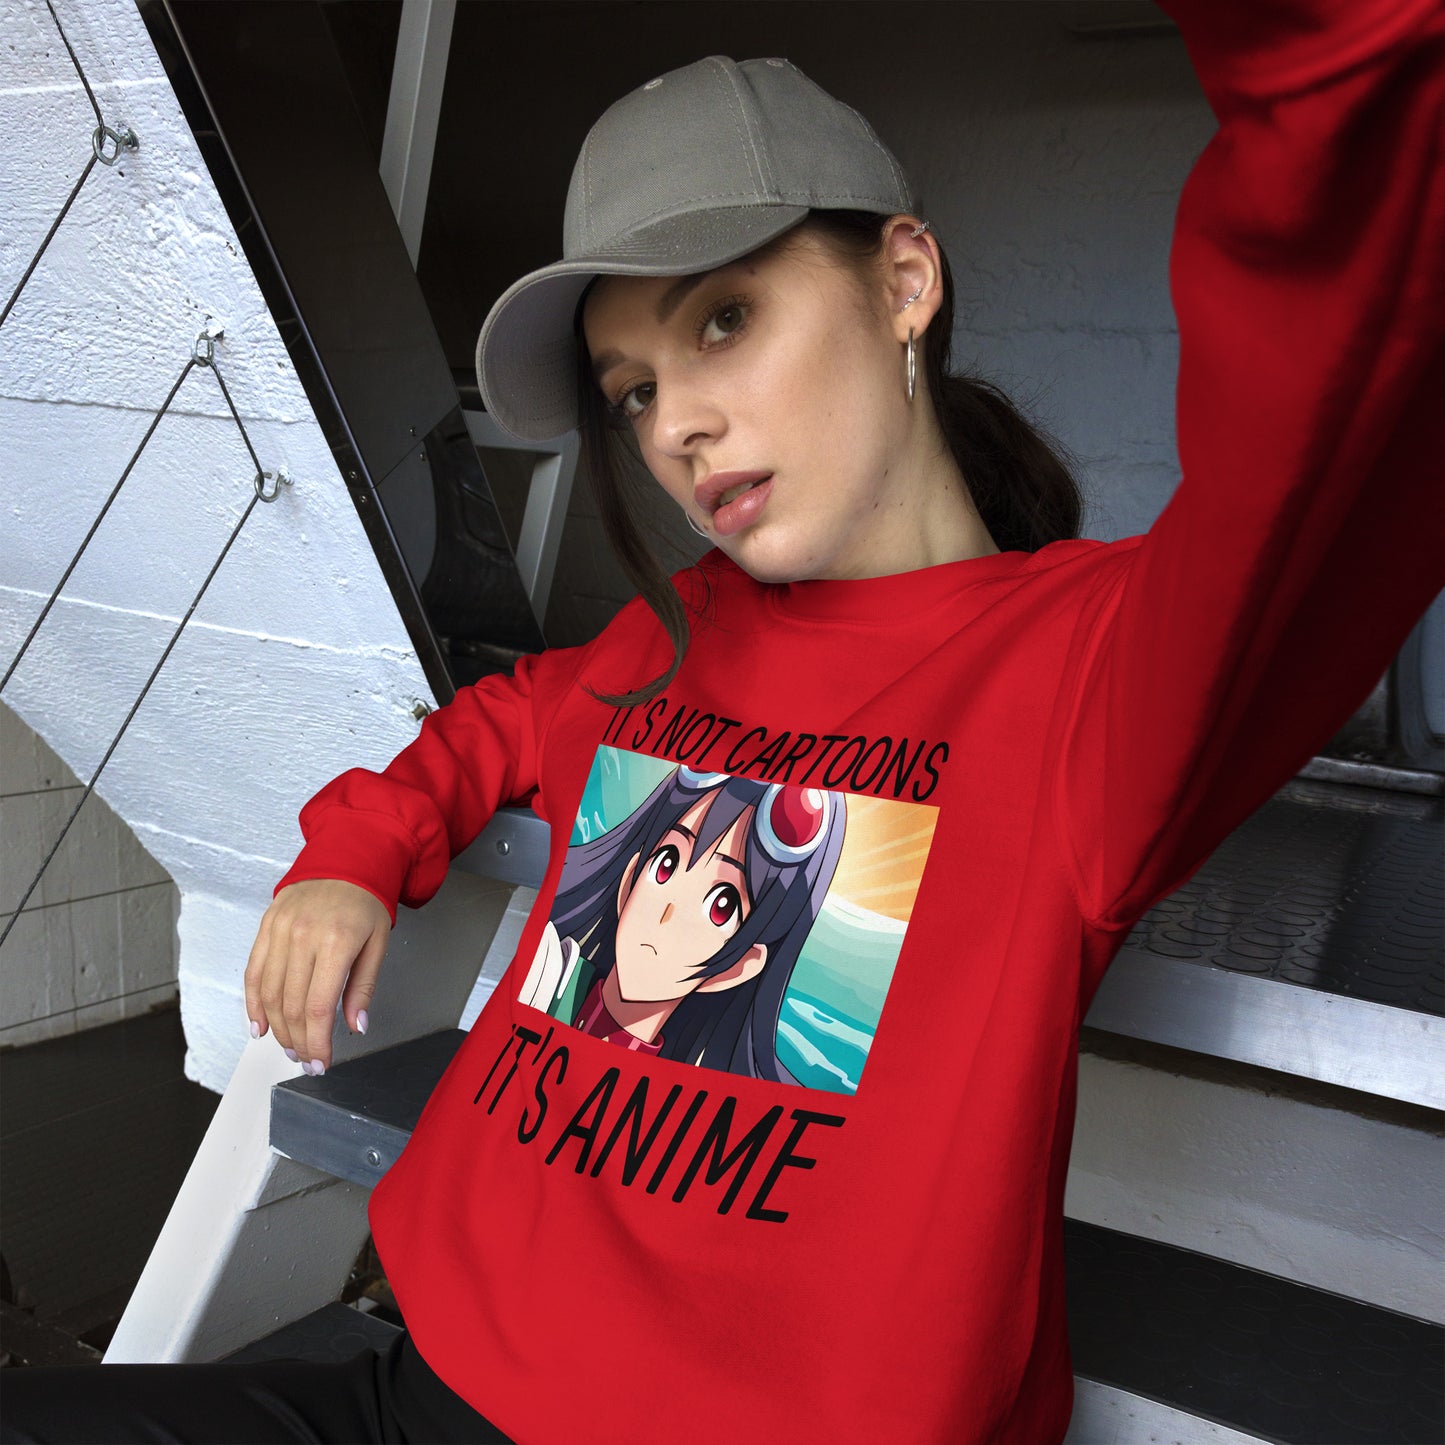 It's Not Cartoons It's Anime Unisex Sweatshirt